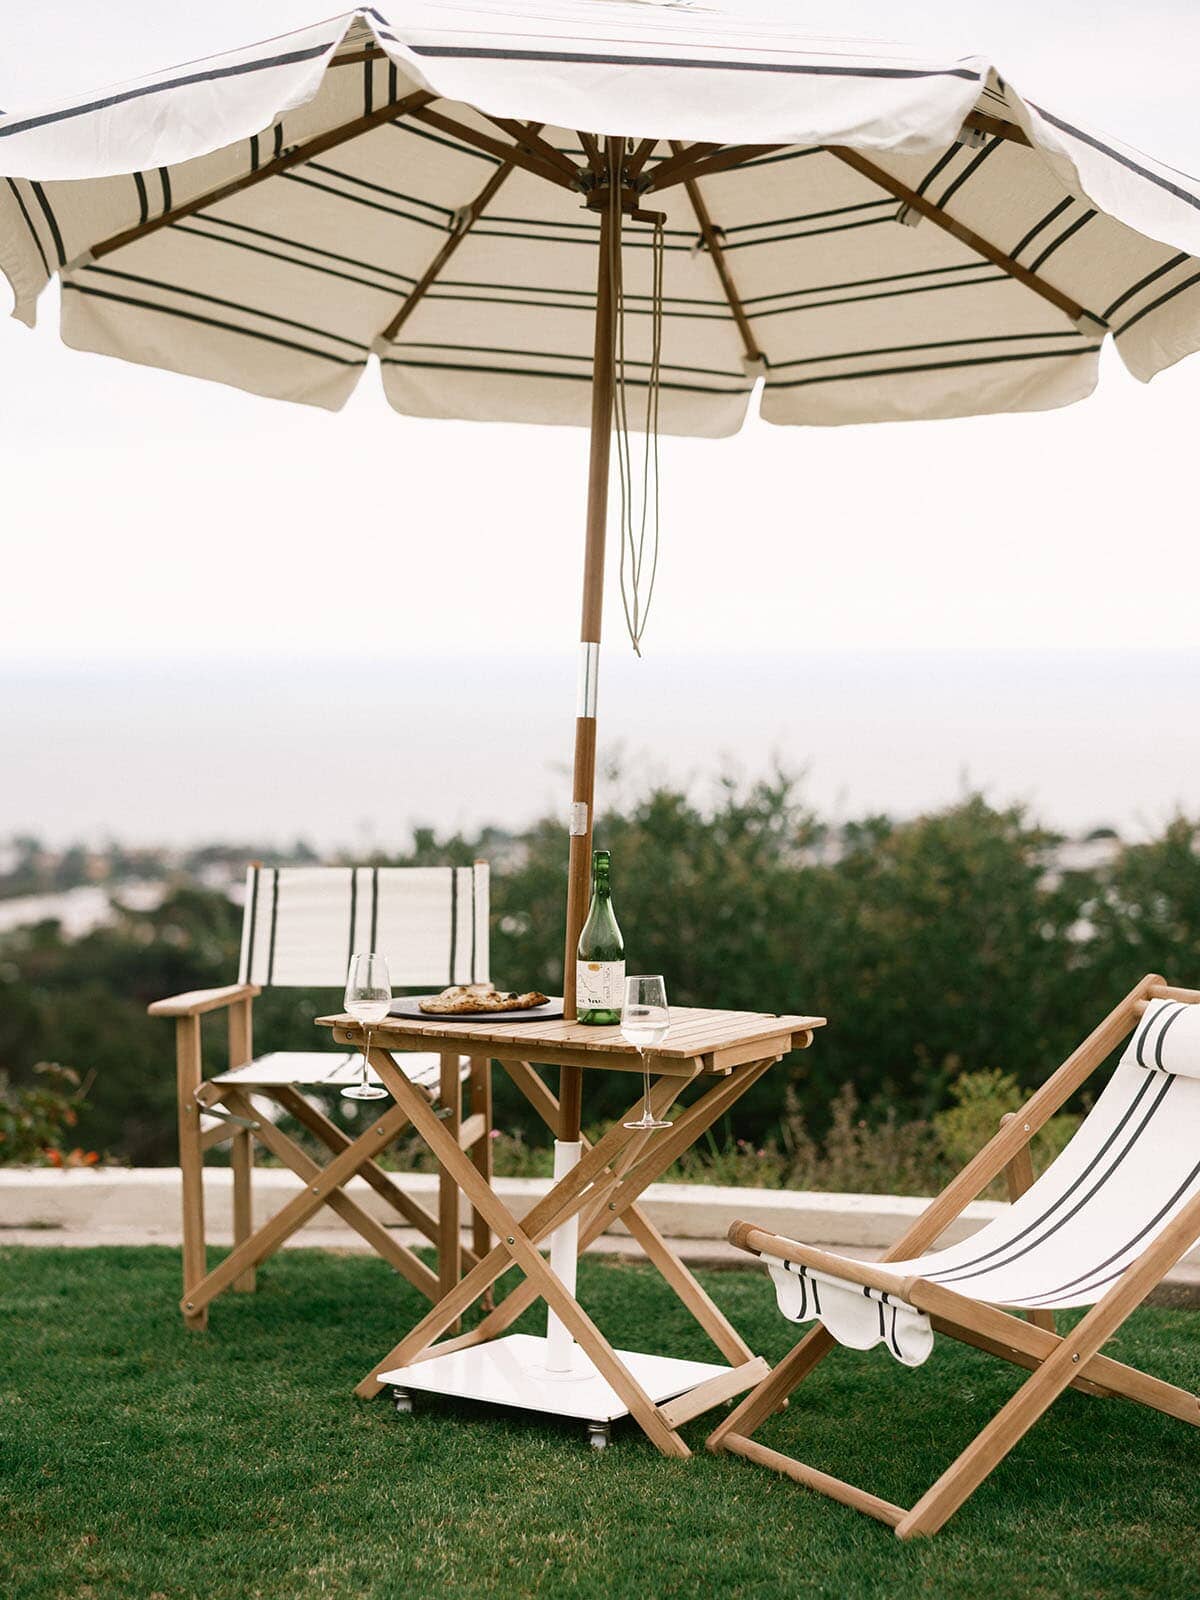 Malibu black stripe umbrella and chairs on grass